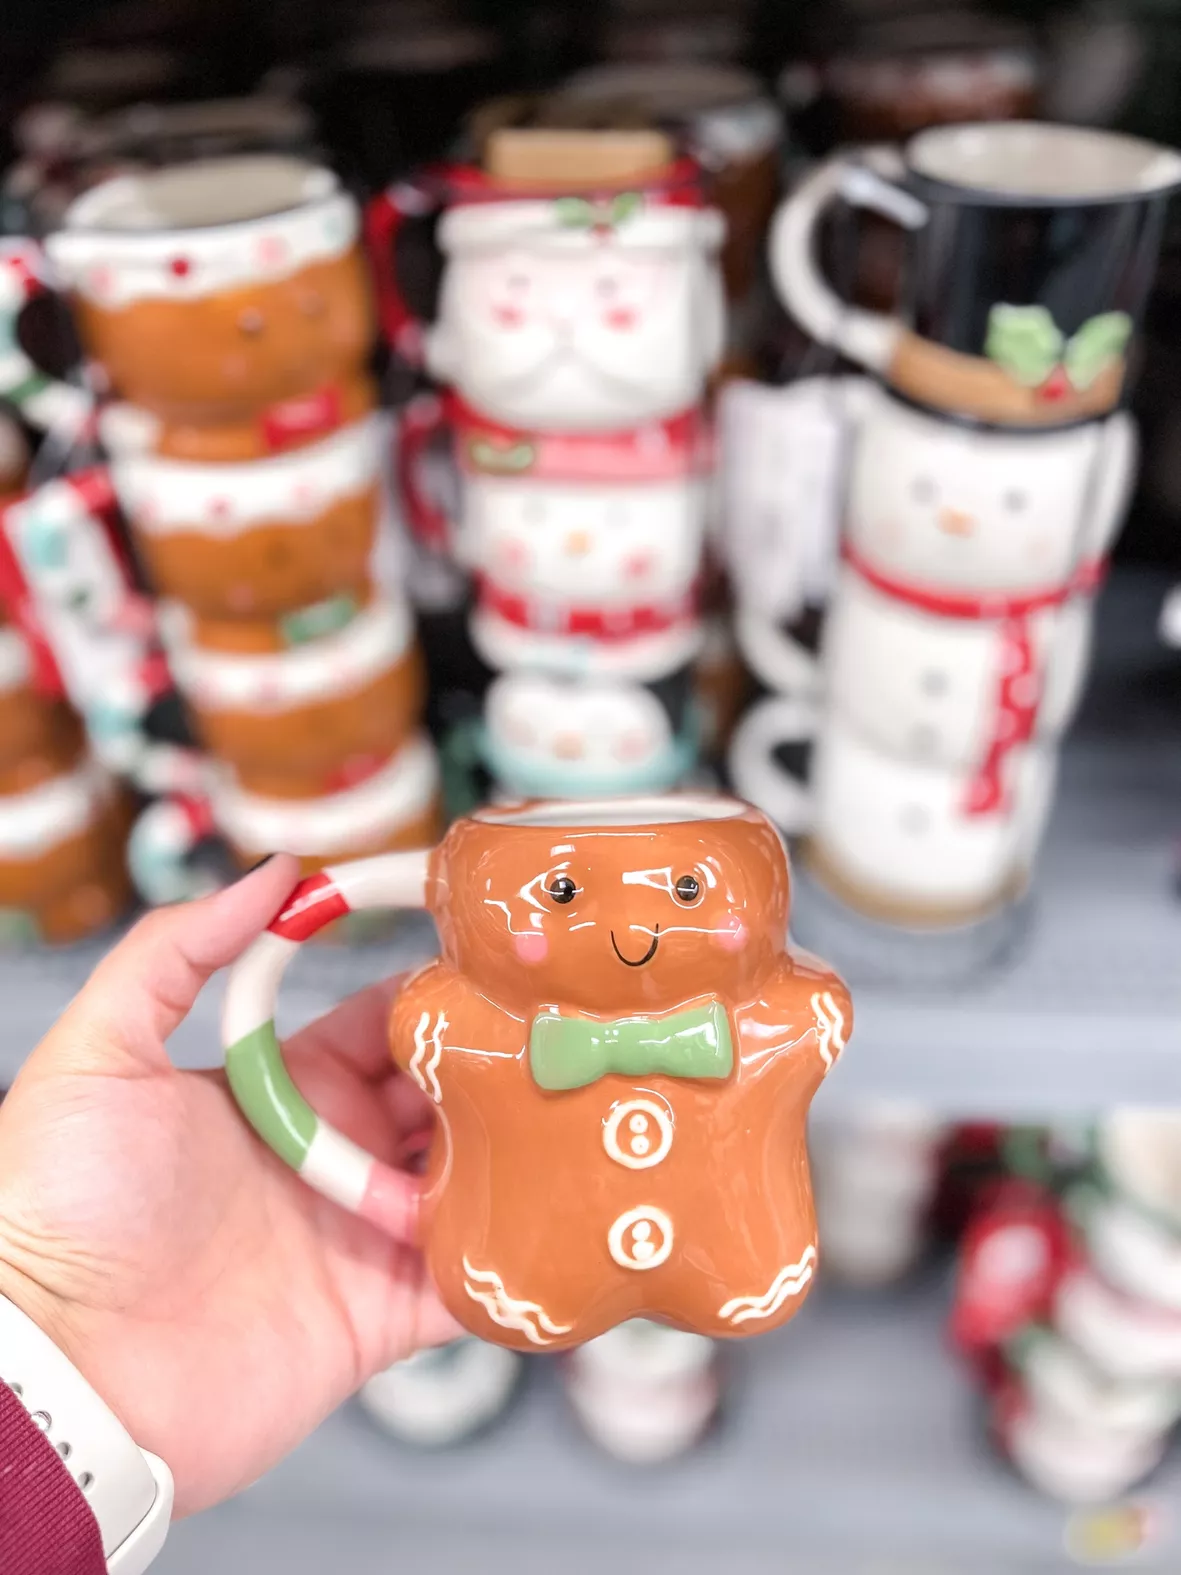 Gingerbread Mugs - Set of 2